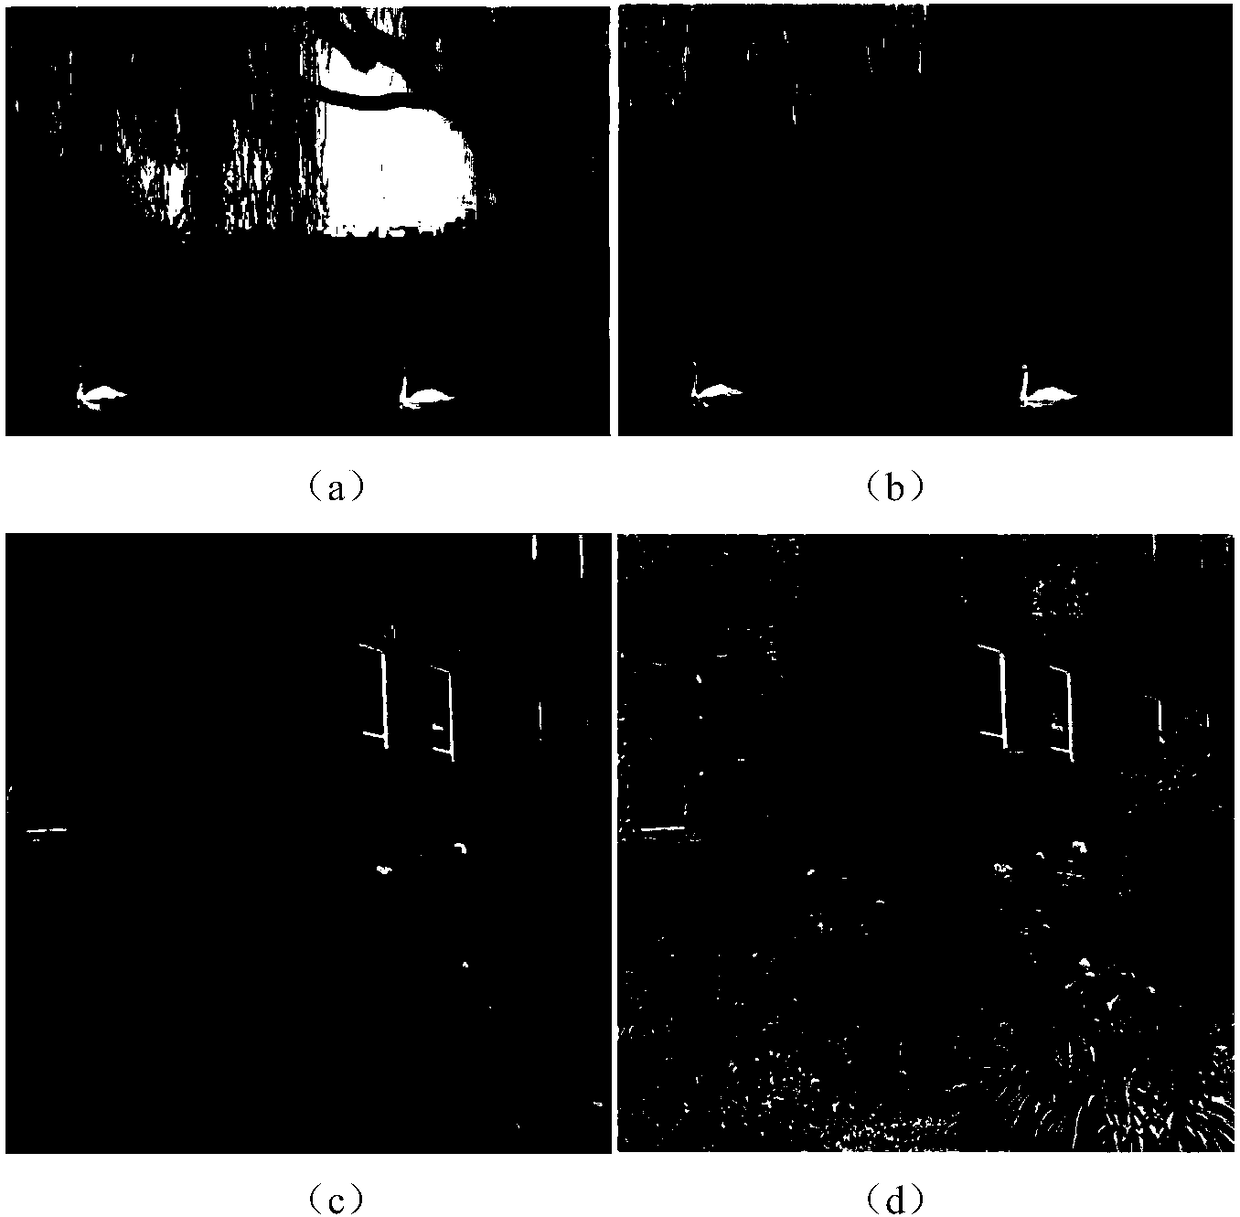 Single image defogging method and device based on bilateral filtering and median filtering